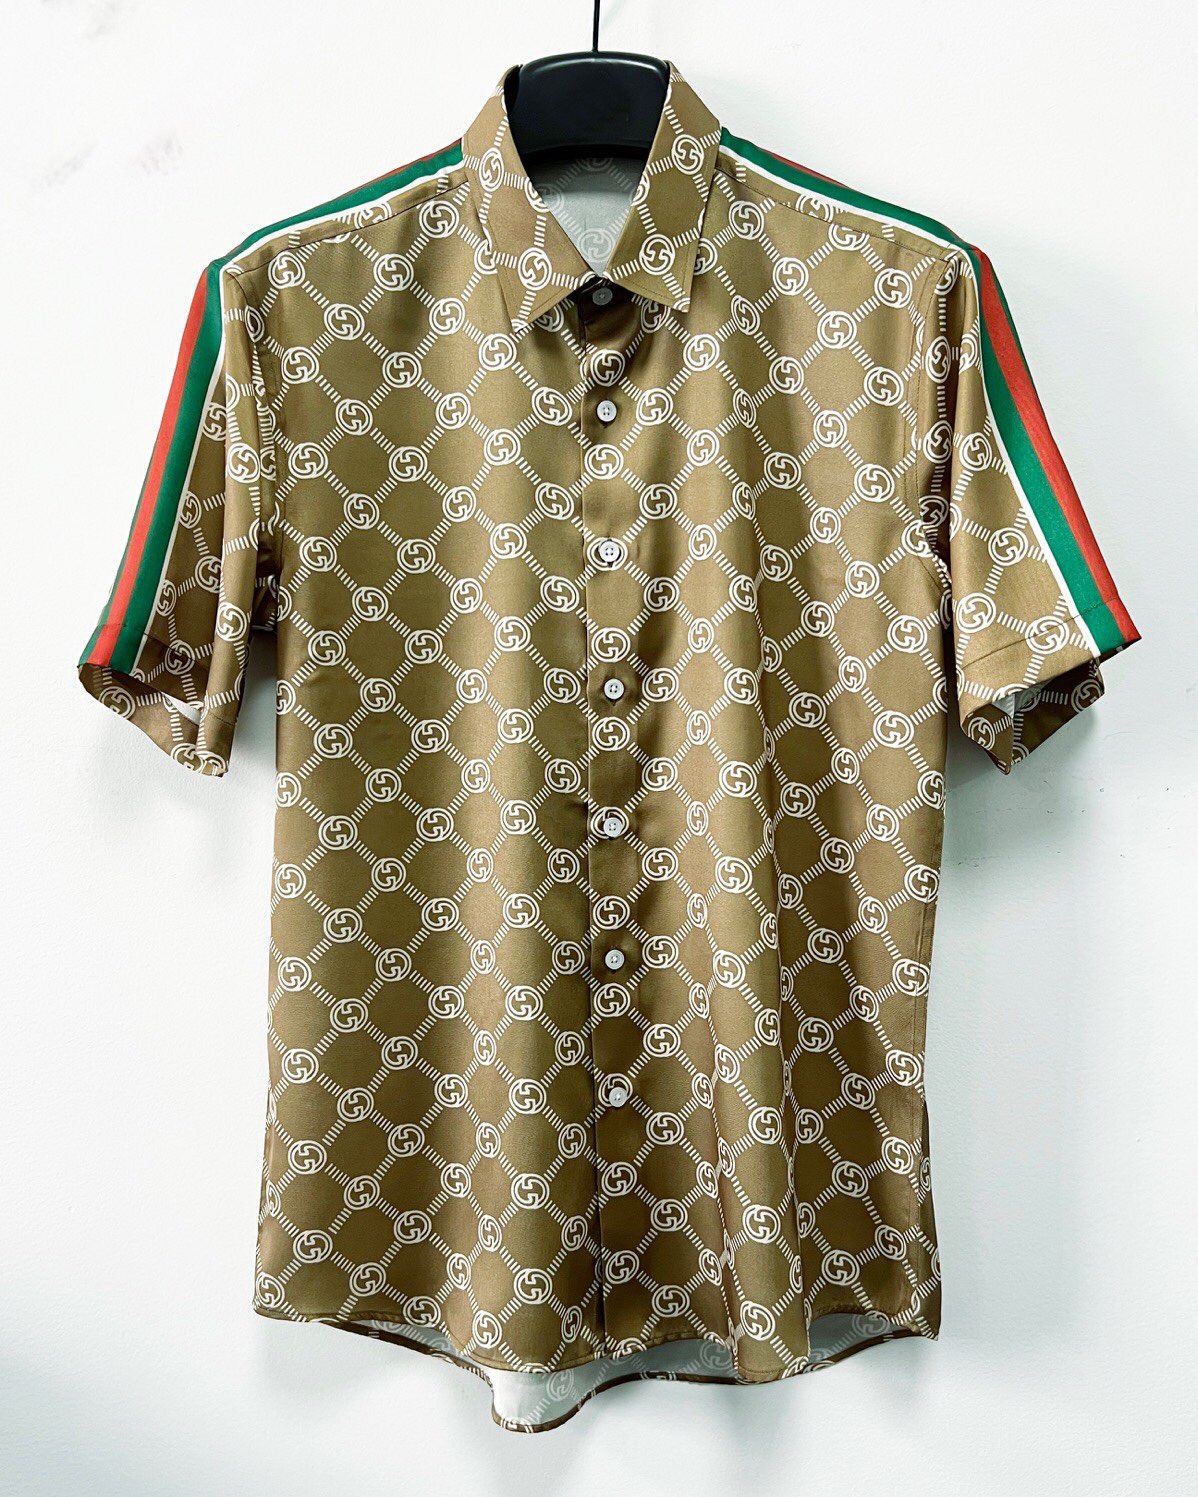 Gucci Short Sleeve Shirts For Men # 269728, cheap Gucci shirt, only $49!